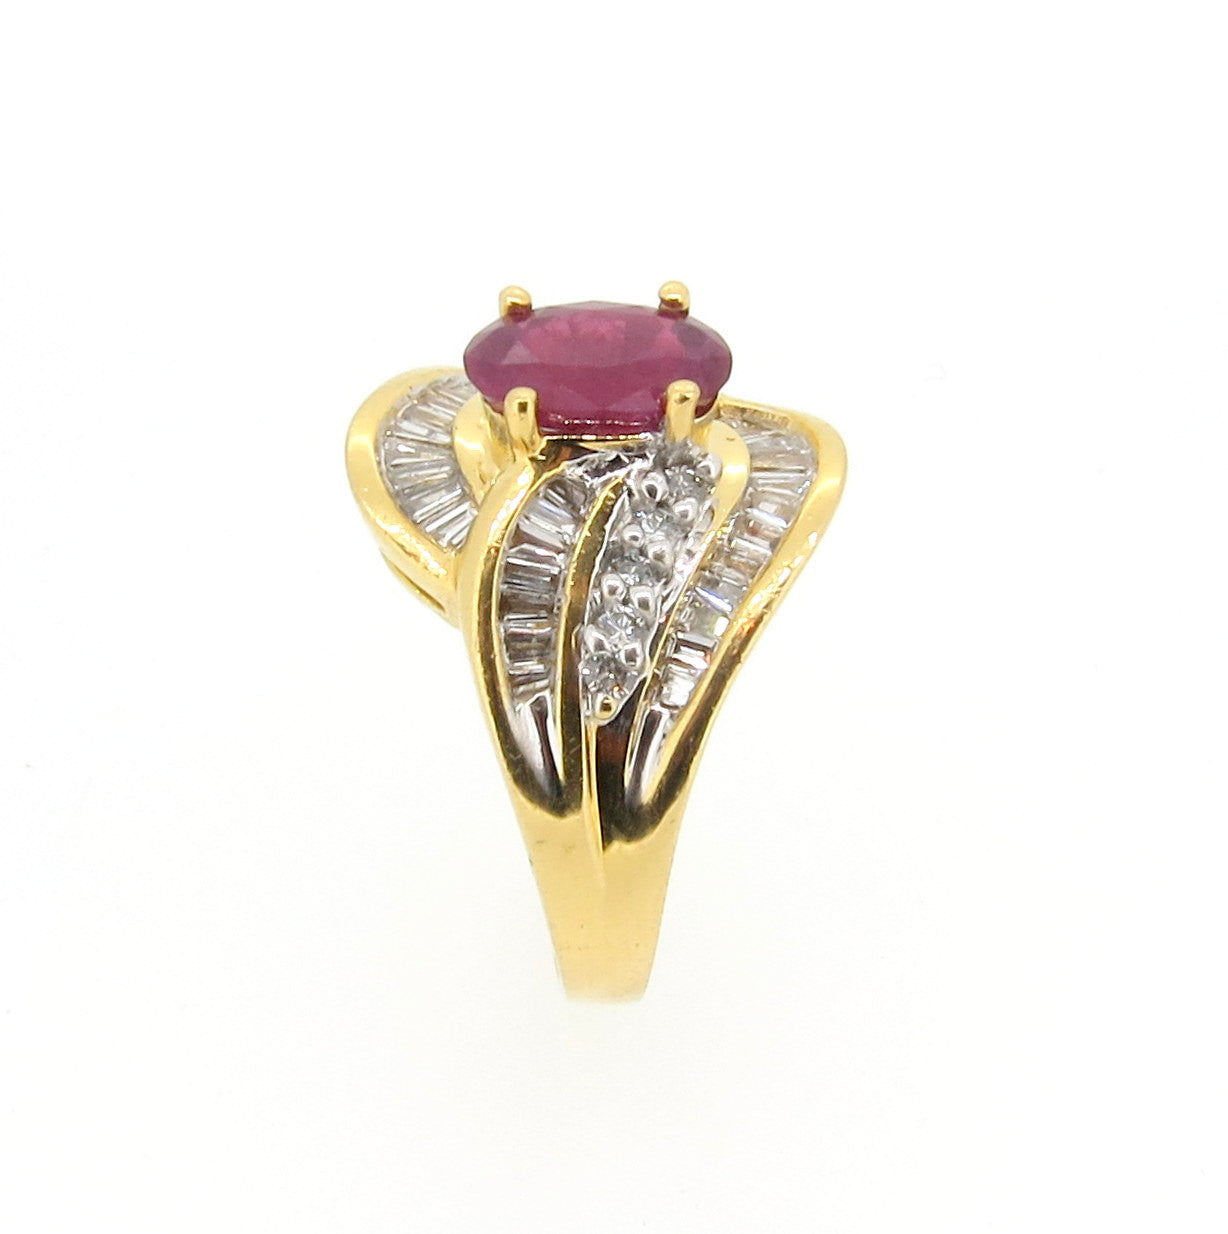 Ruby & Diamond Gemstone Engagement Ring, Anniversary Ring, Cocktail Ring